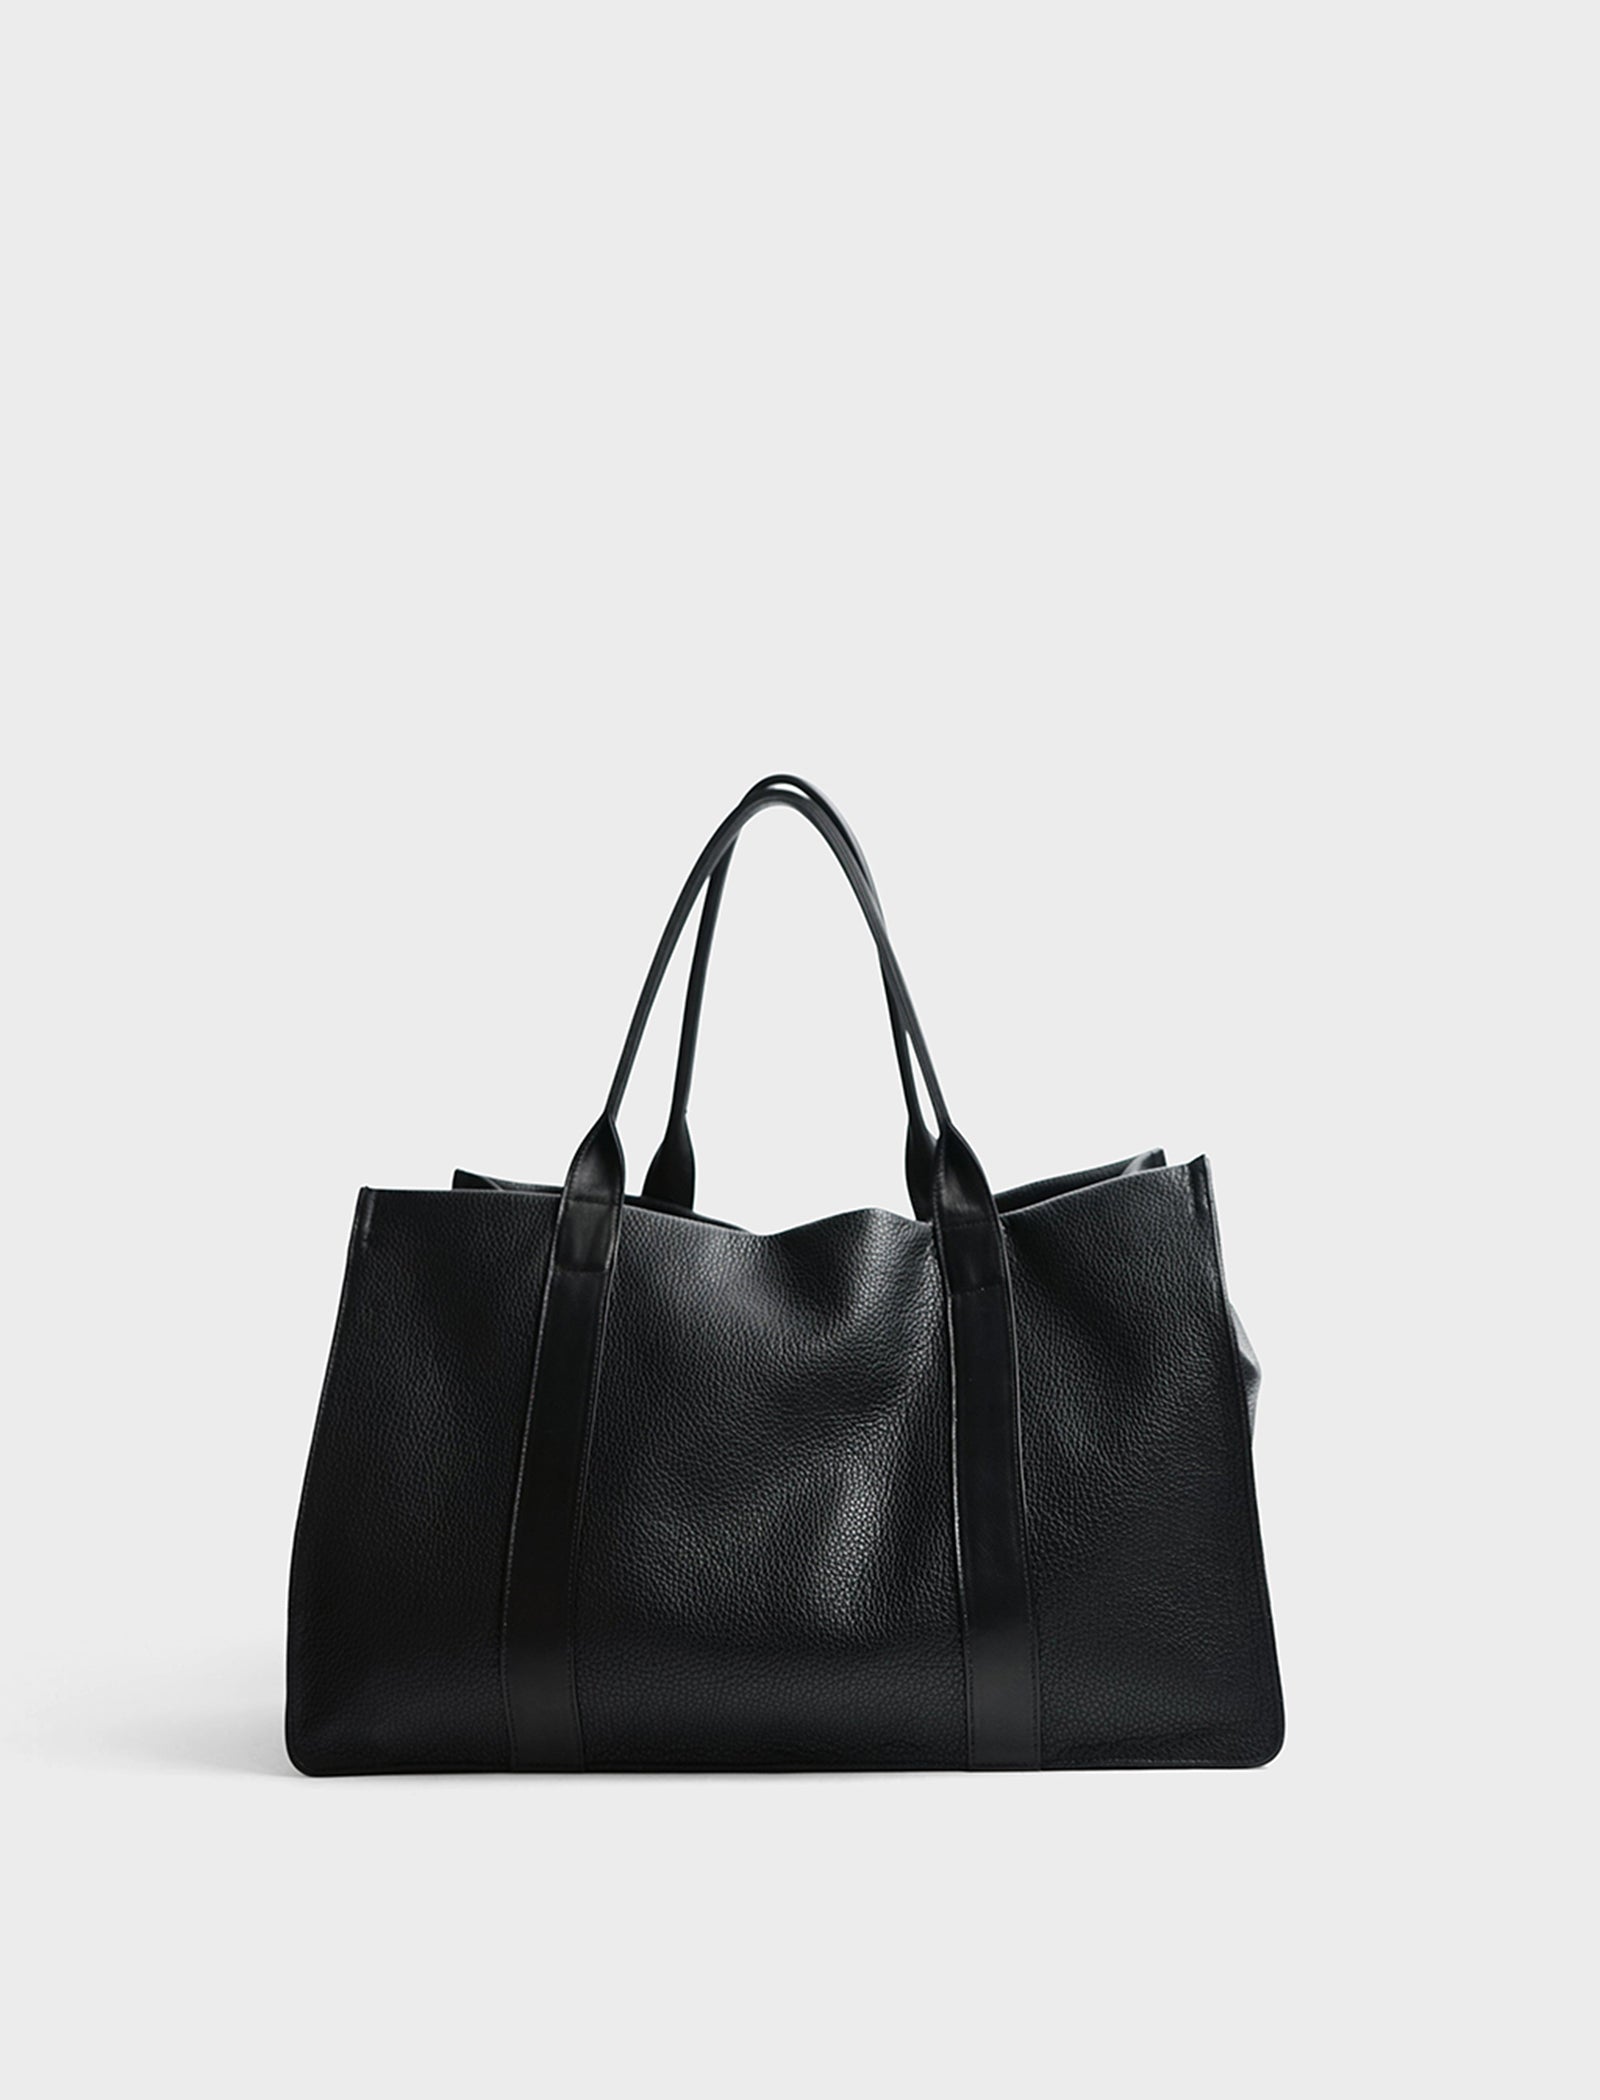 Grocer Tote Deluxe - Black Grain Shoulder Bag | A-ESQUE